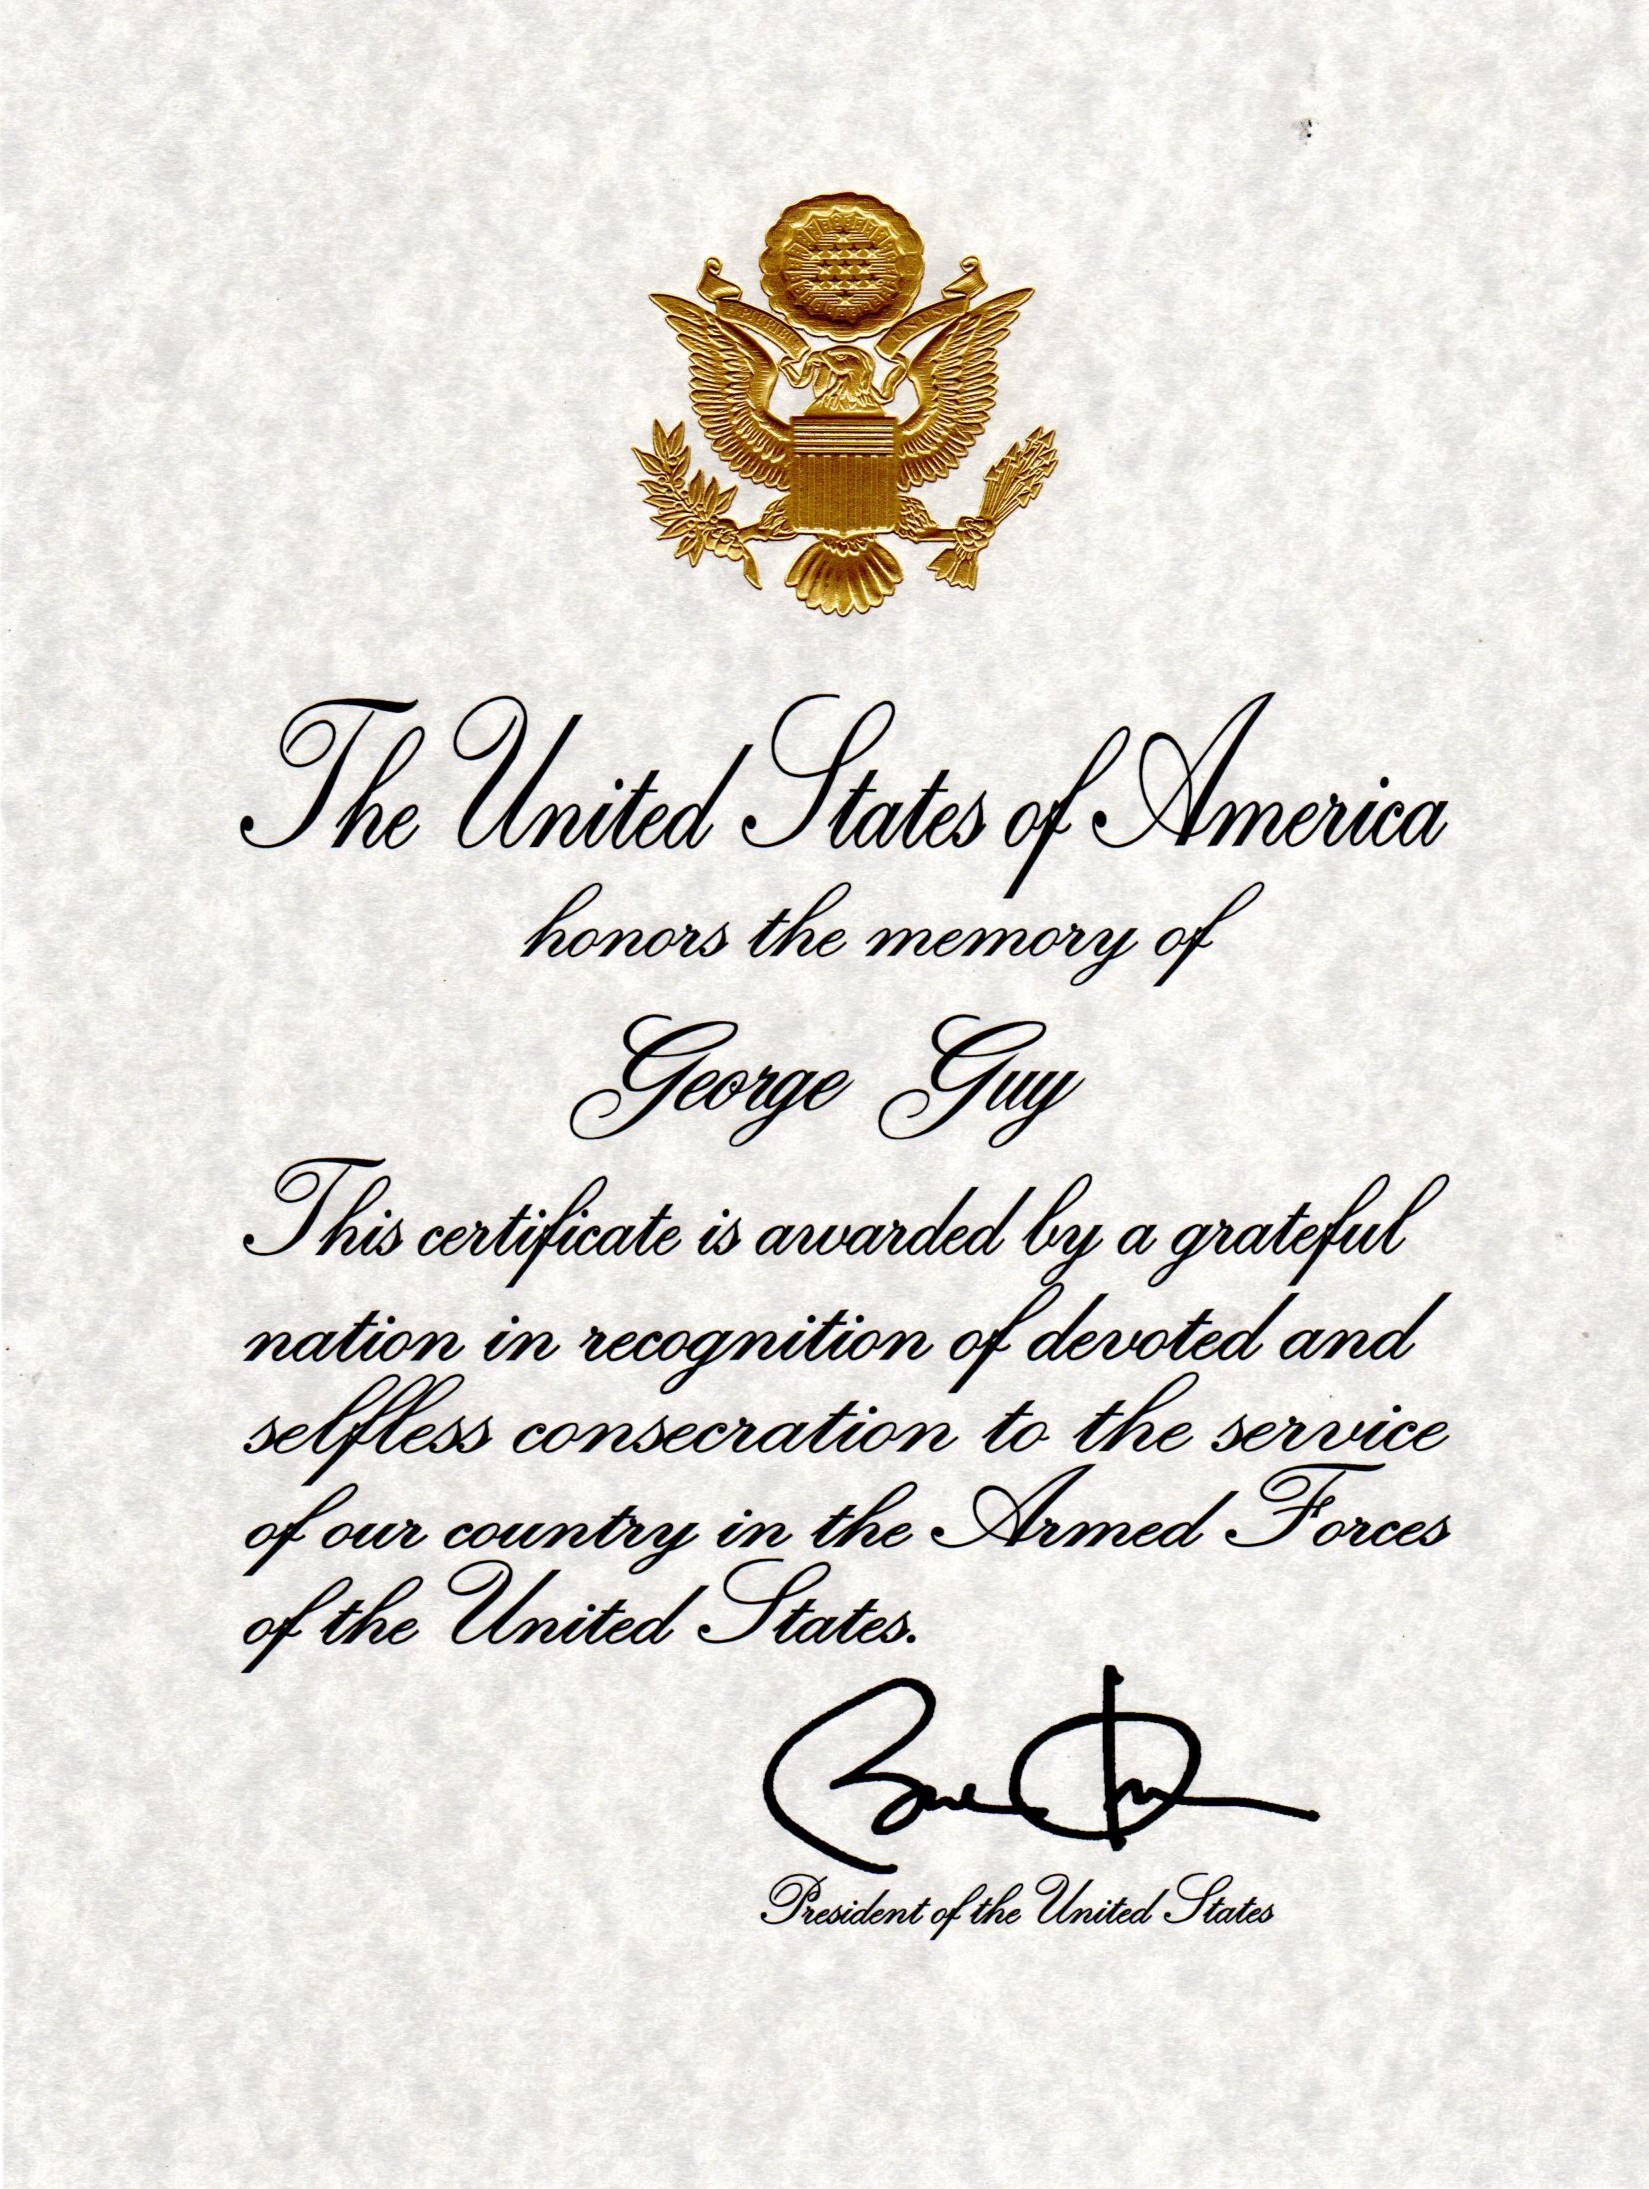 George Guy - Presidential Memorial Certificate